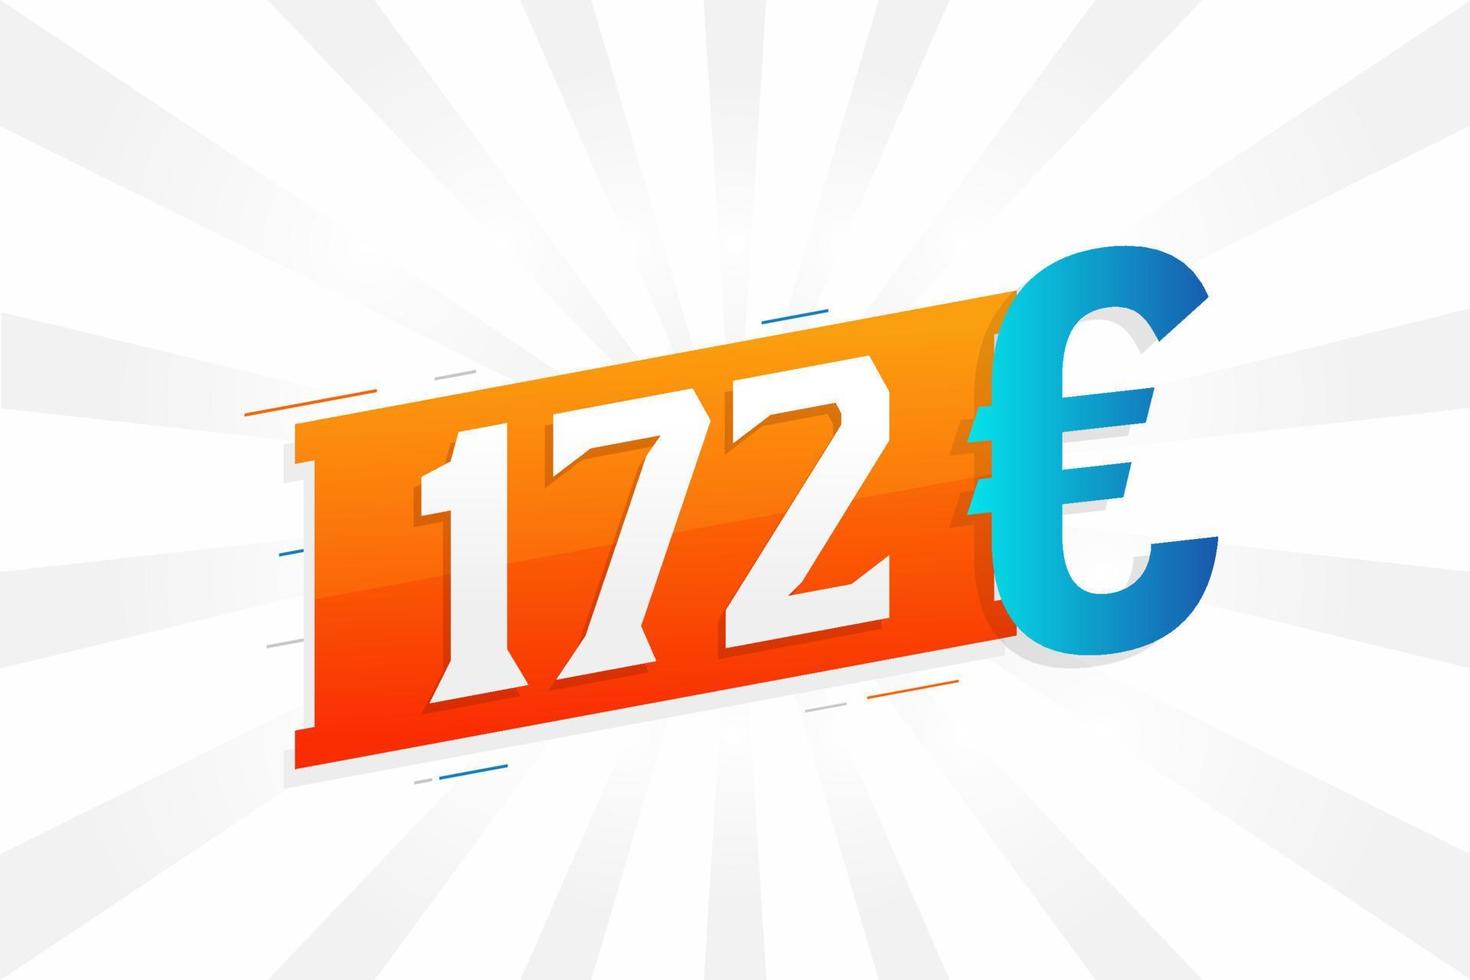 Símbolo de texto vectorial de moneda de 172 euros. 172 euro vector de stock de dinero de la unión europea